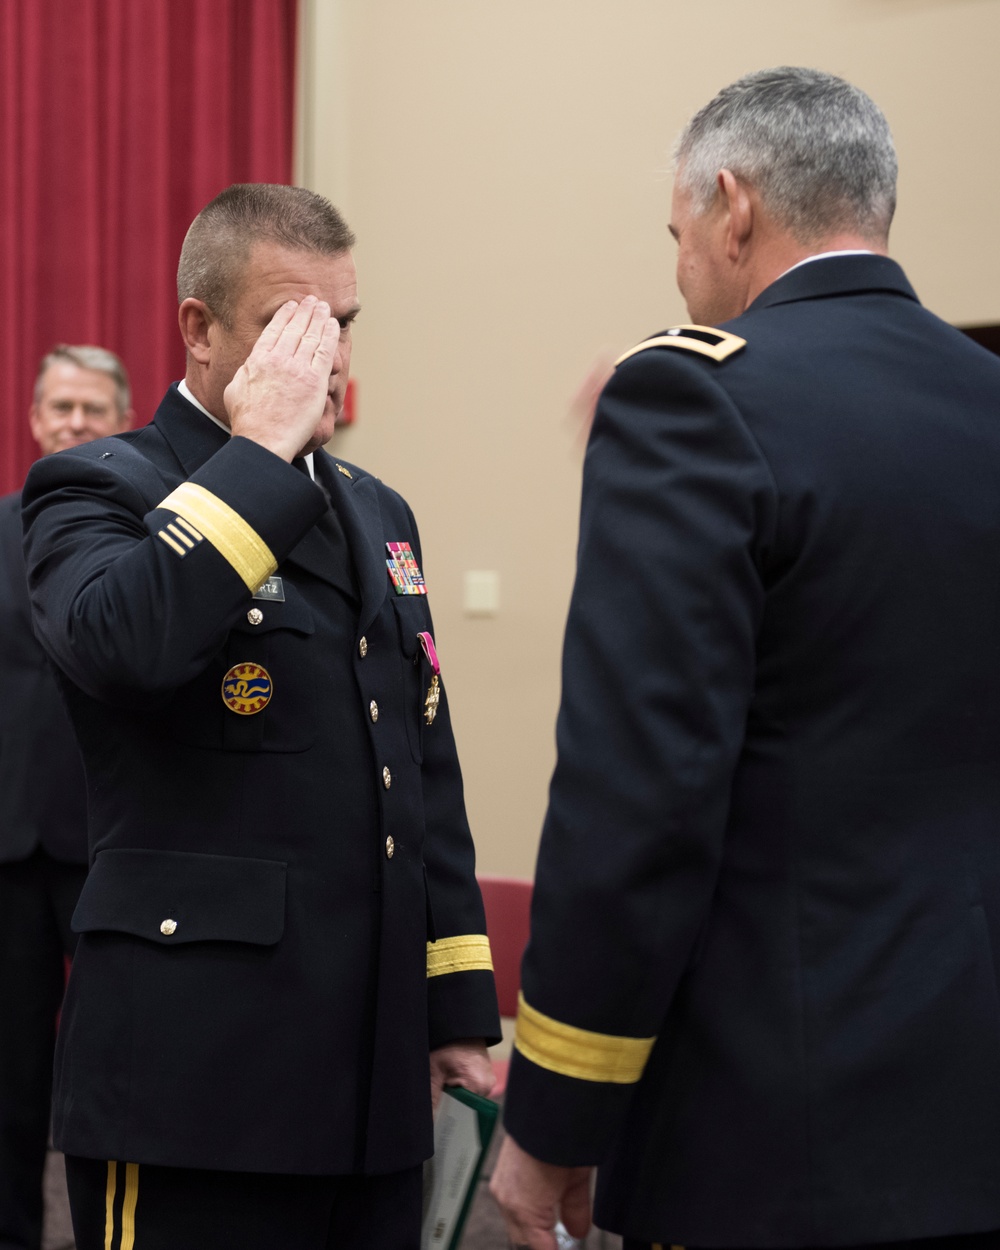 Brigadier General Farin Schwartz presented with the Legion of Merit